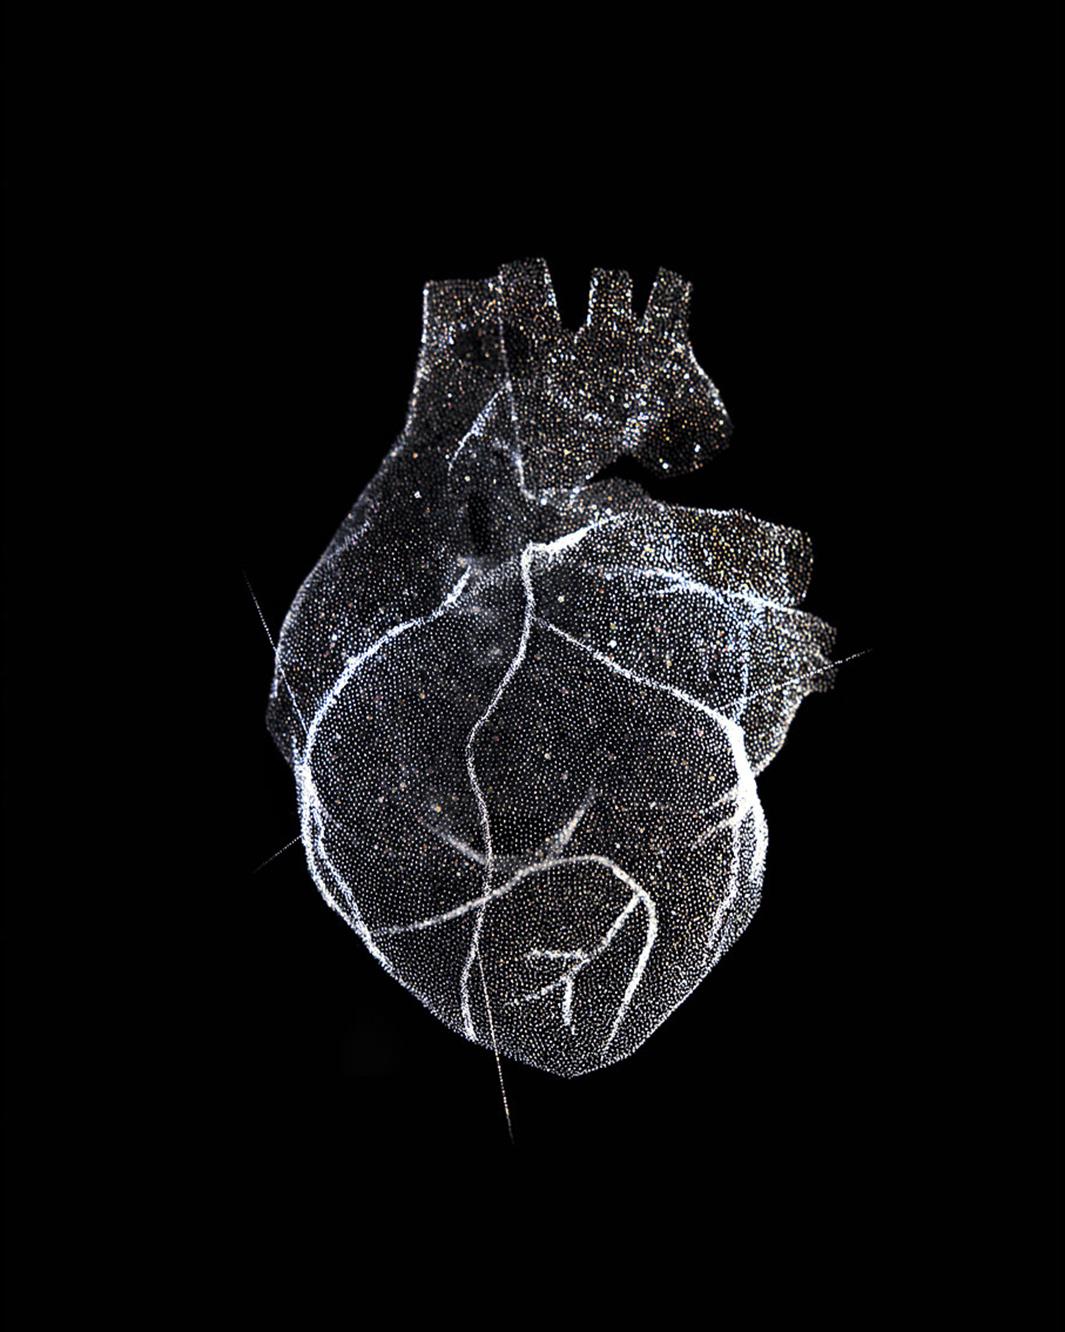 Glass Model of a Heart, 2012.